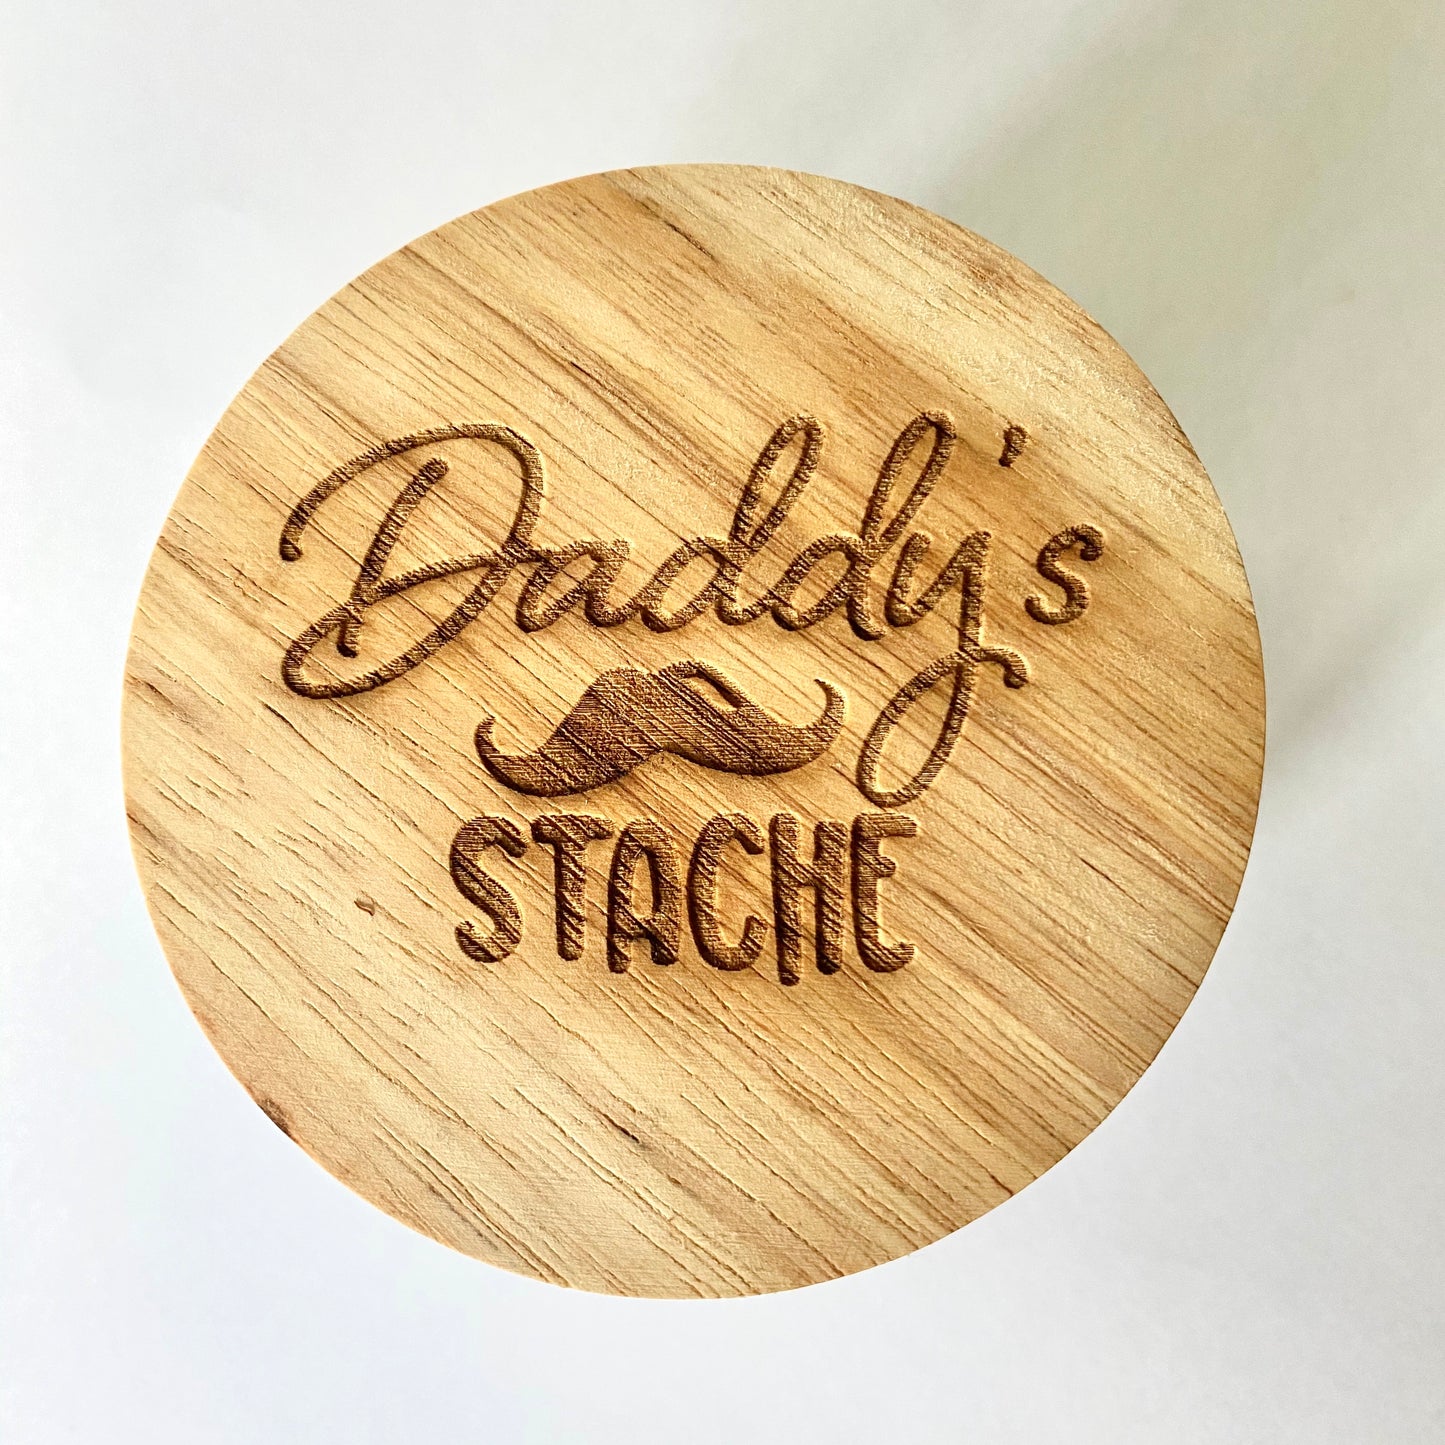 Daddy’s stache jar